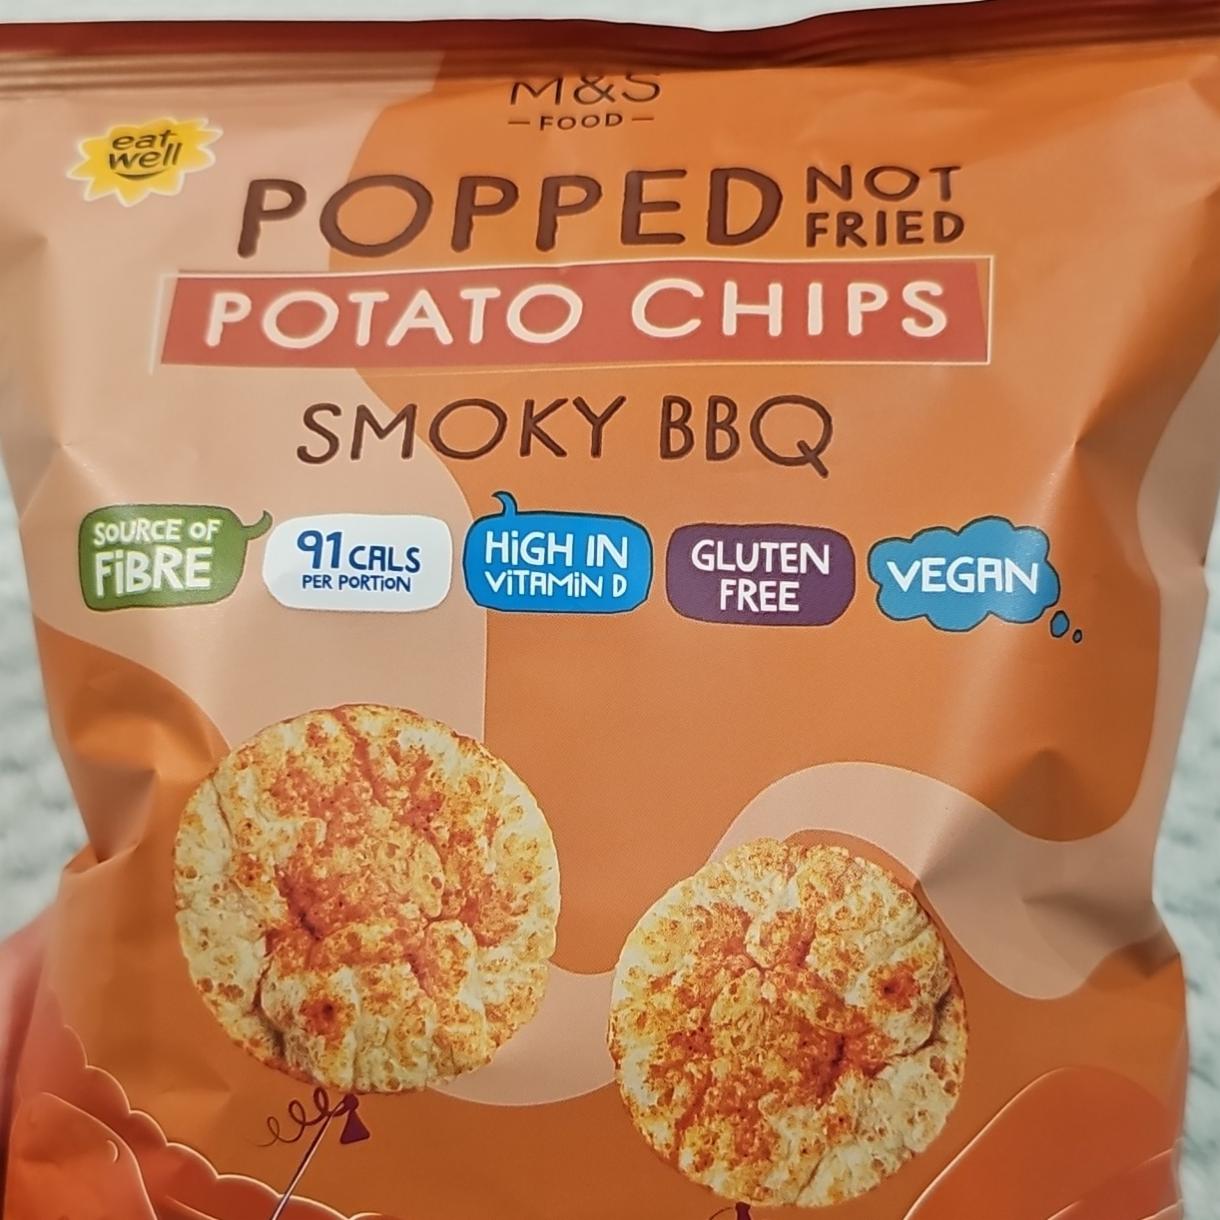 Fotografie - Popped not fried potato chips smoky bbq M&S Food